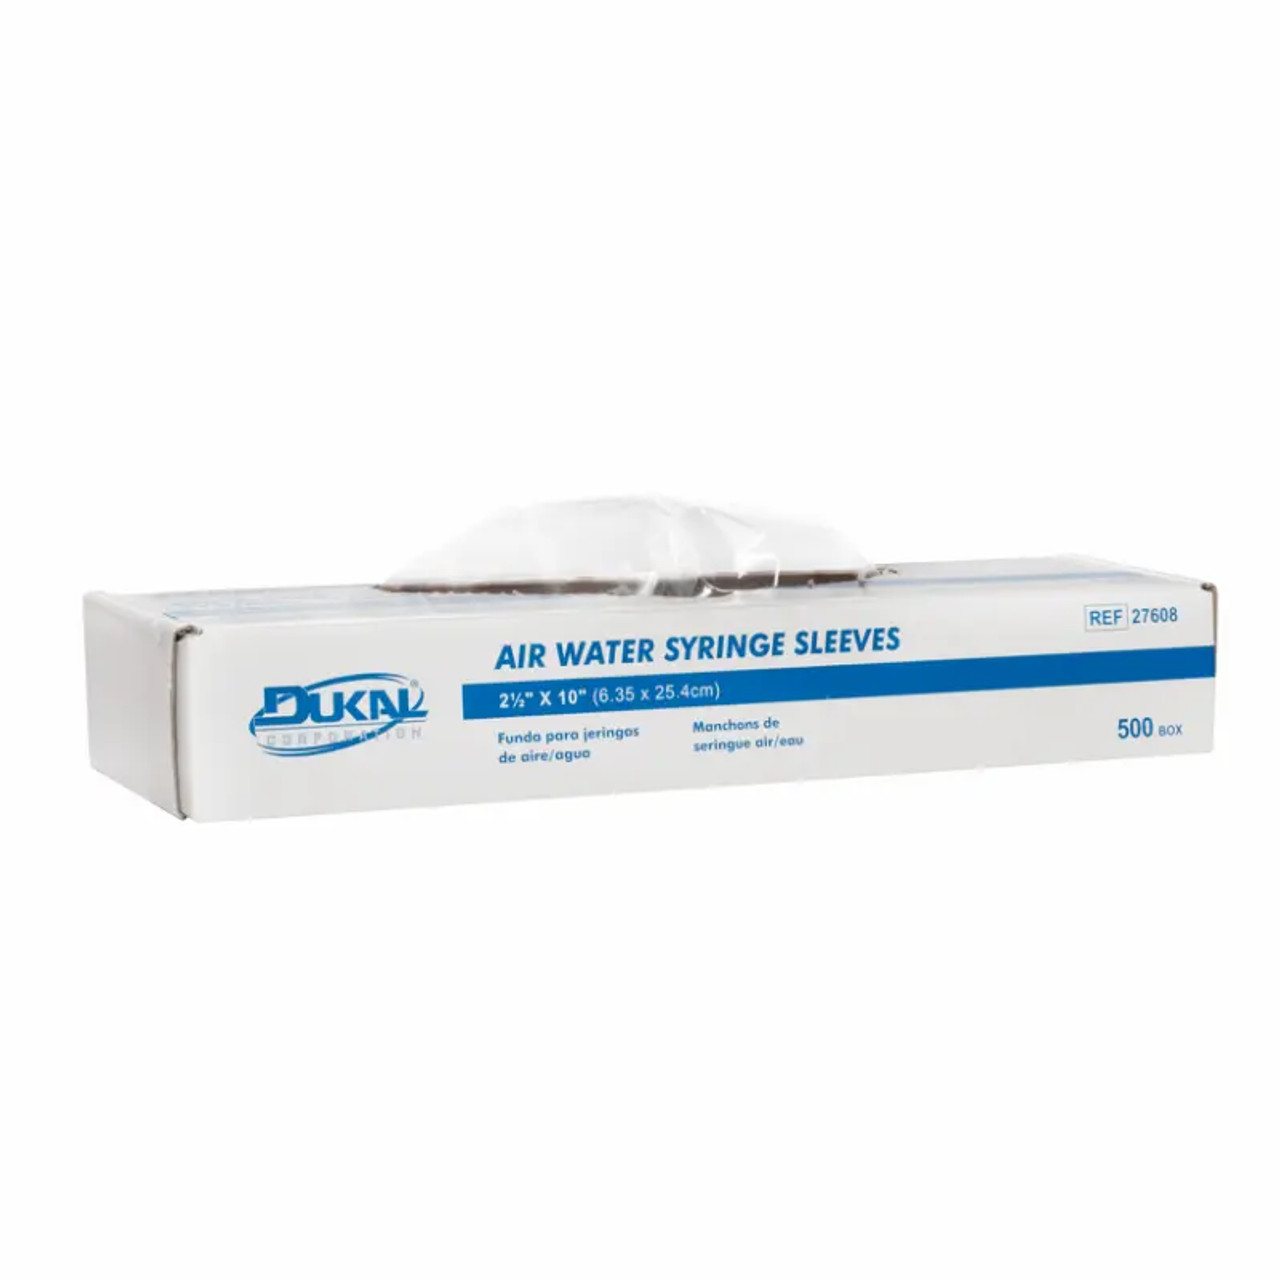 Dukal Air-Water Syringe Sleeves 2-1/2" X 10" 500/bx